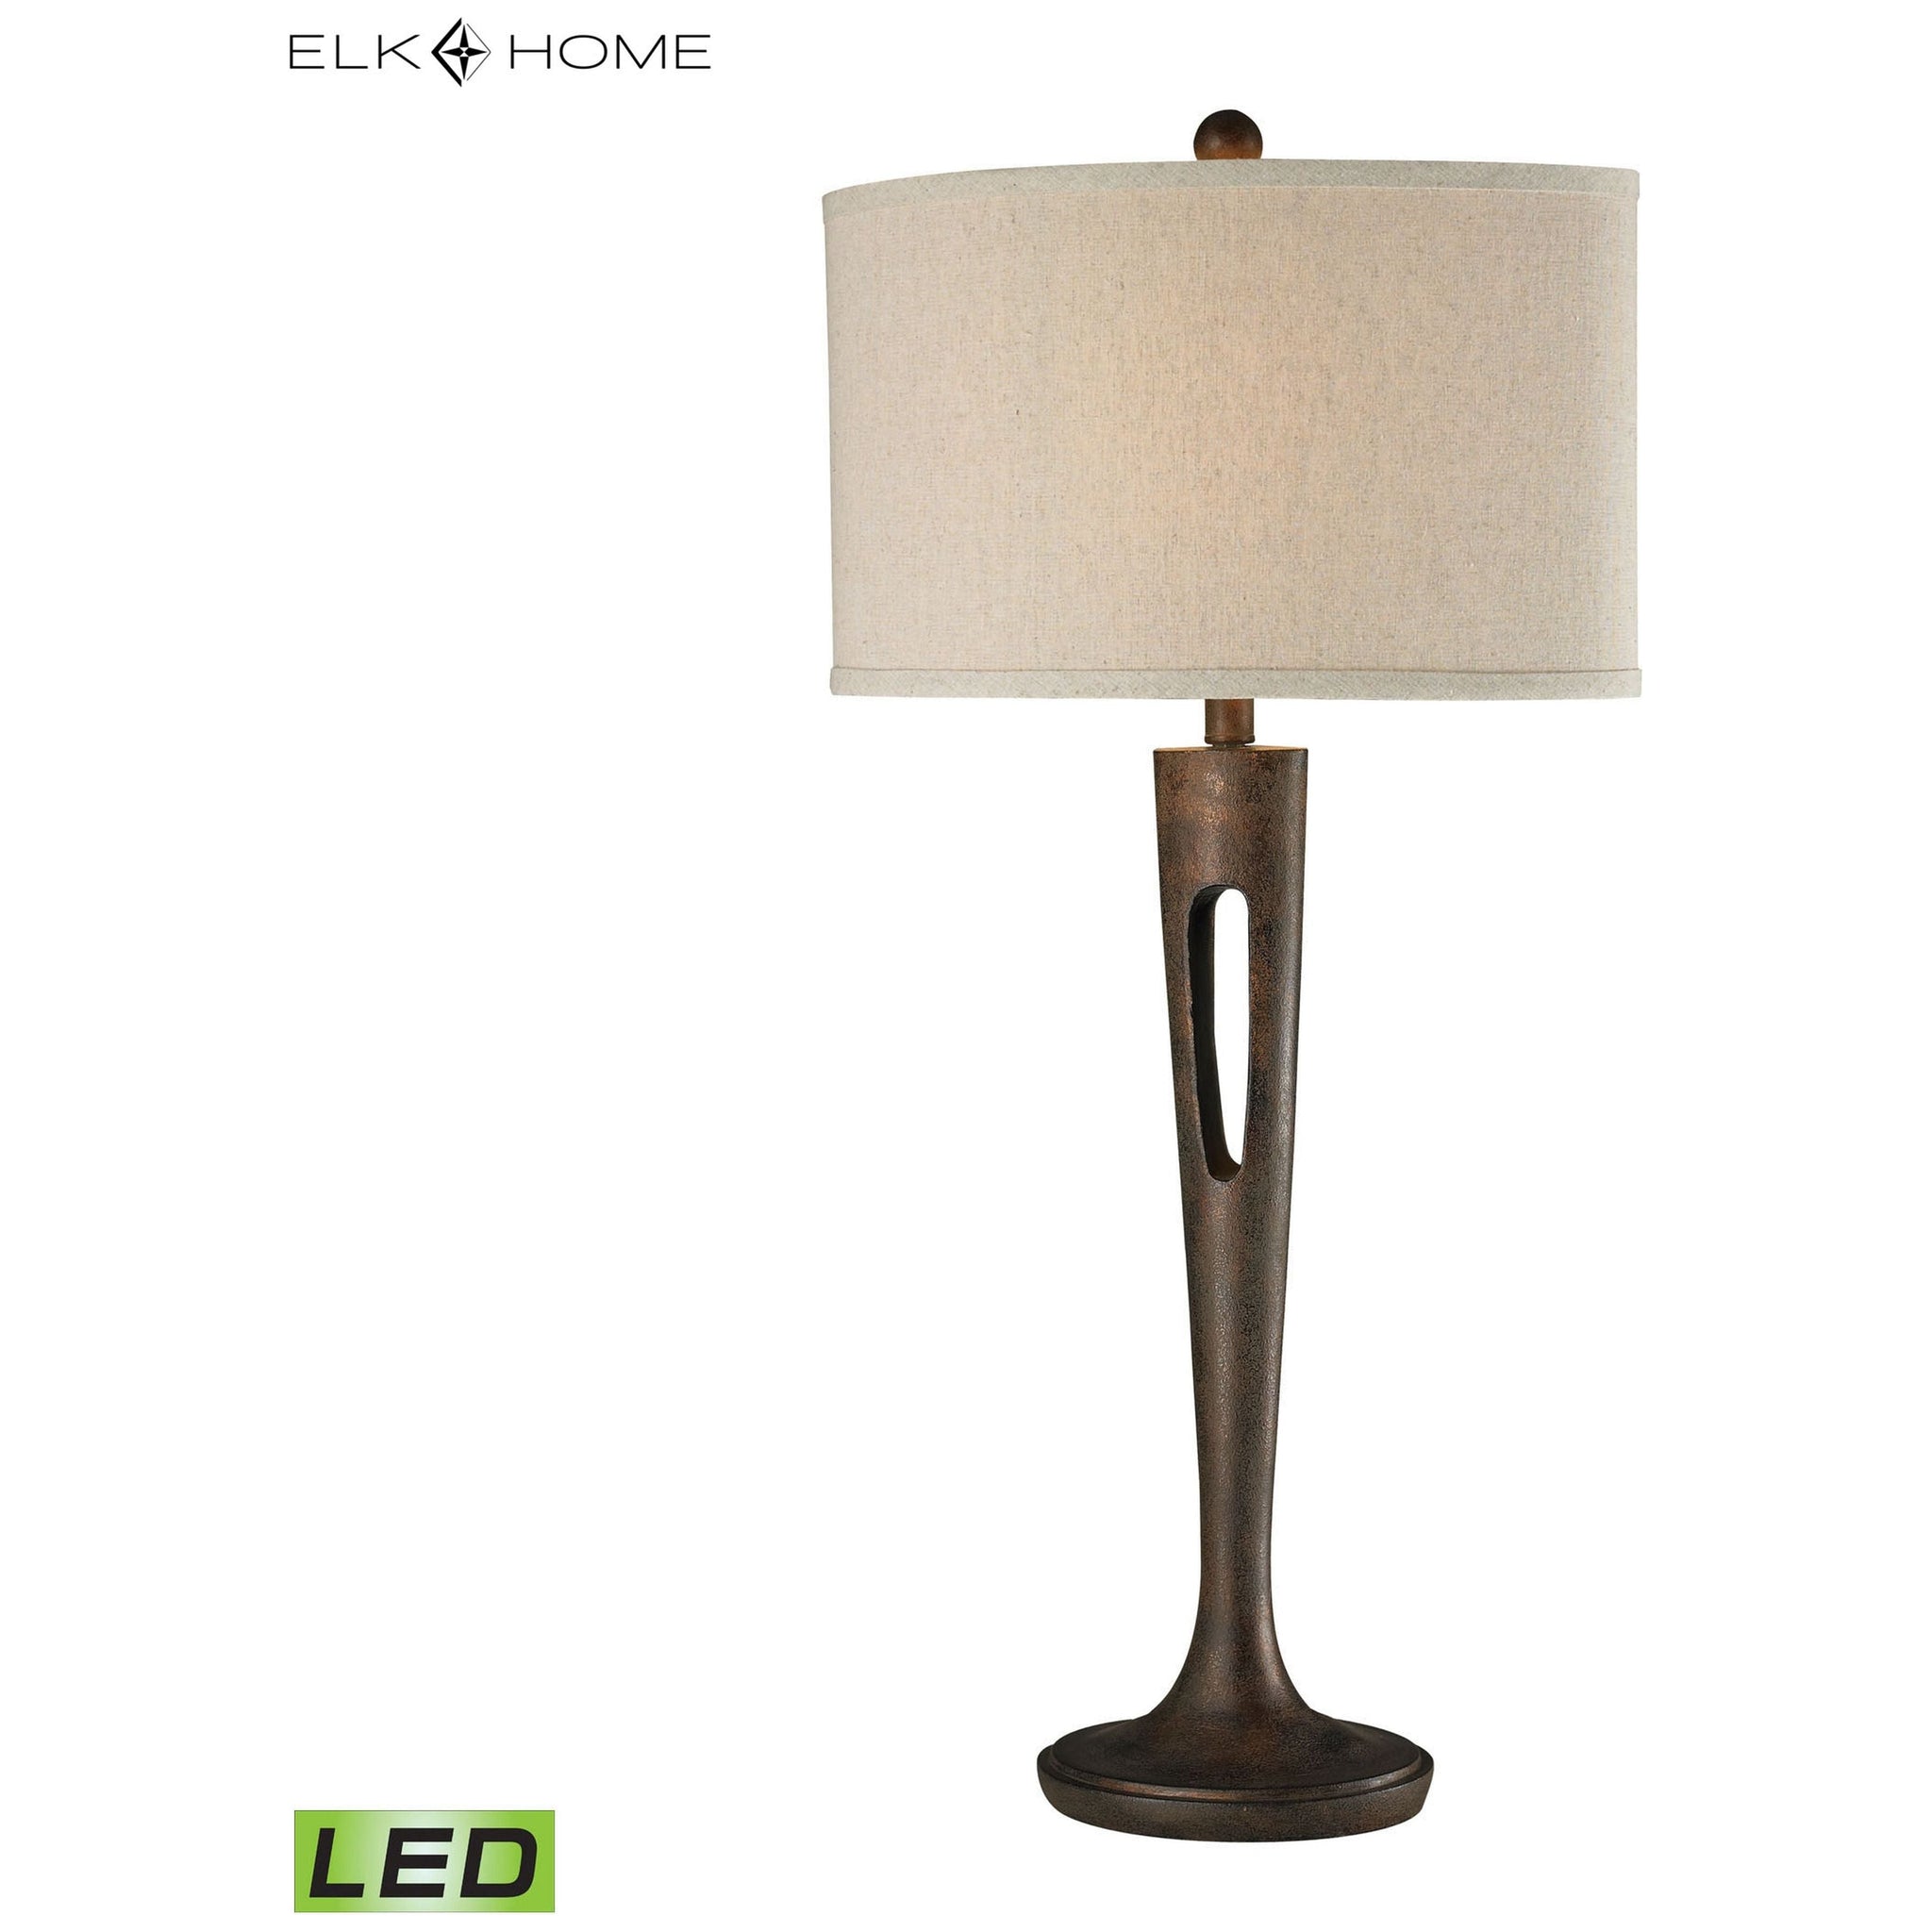 Martcliff 35" High 1-Light Table Lamp